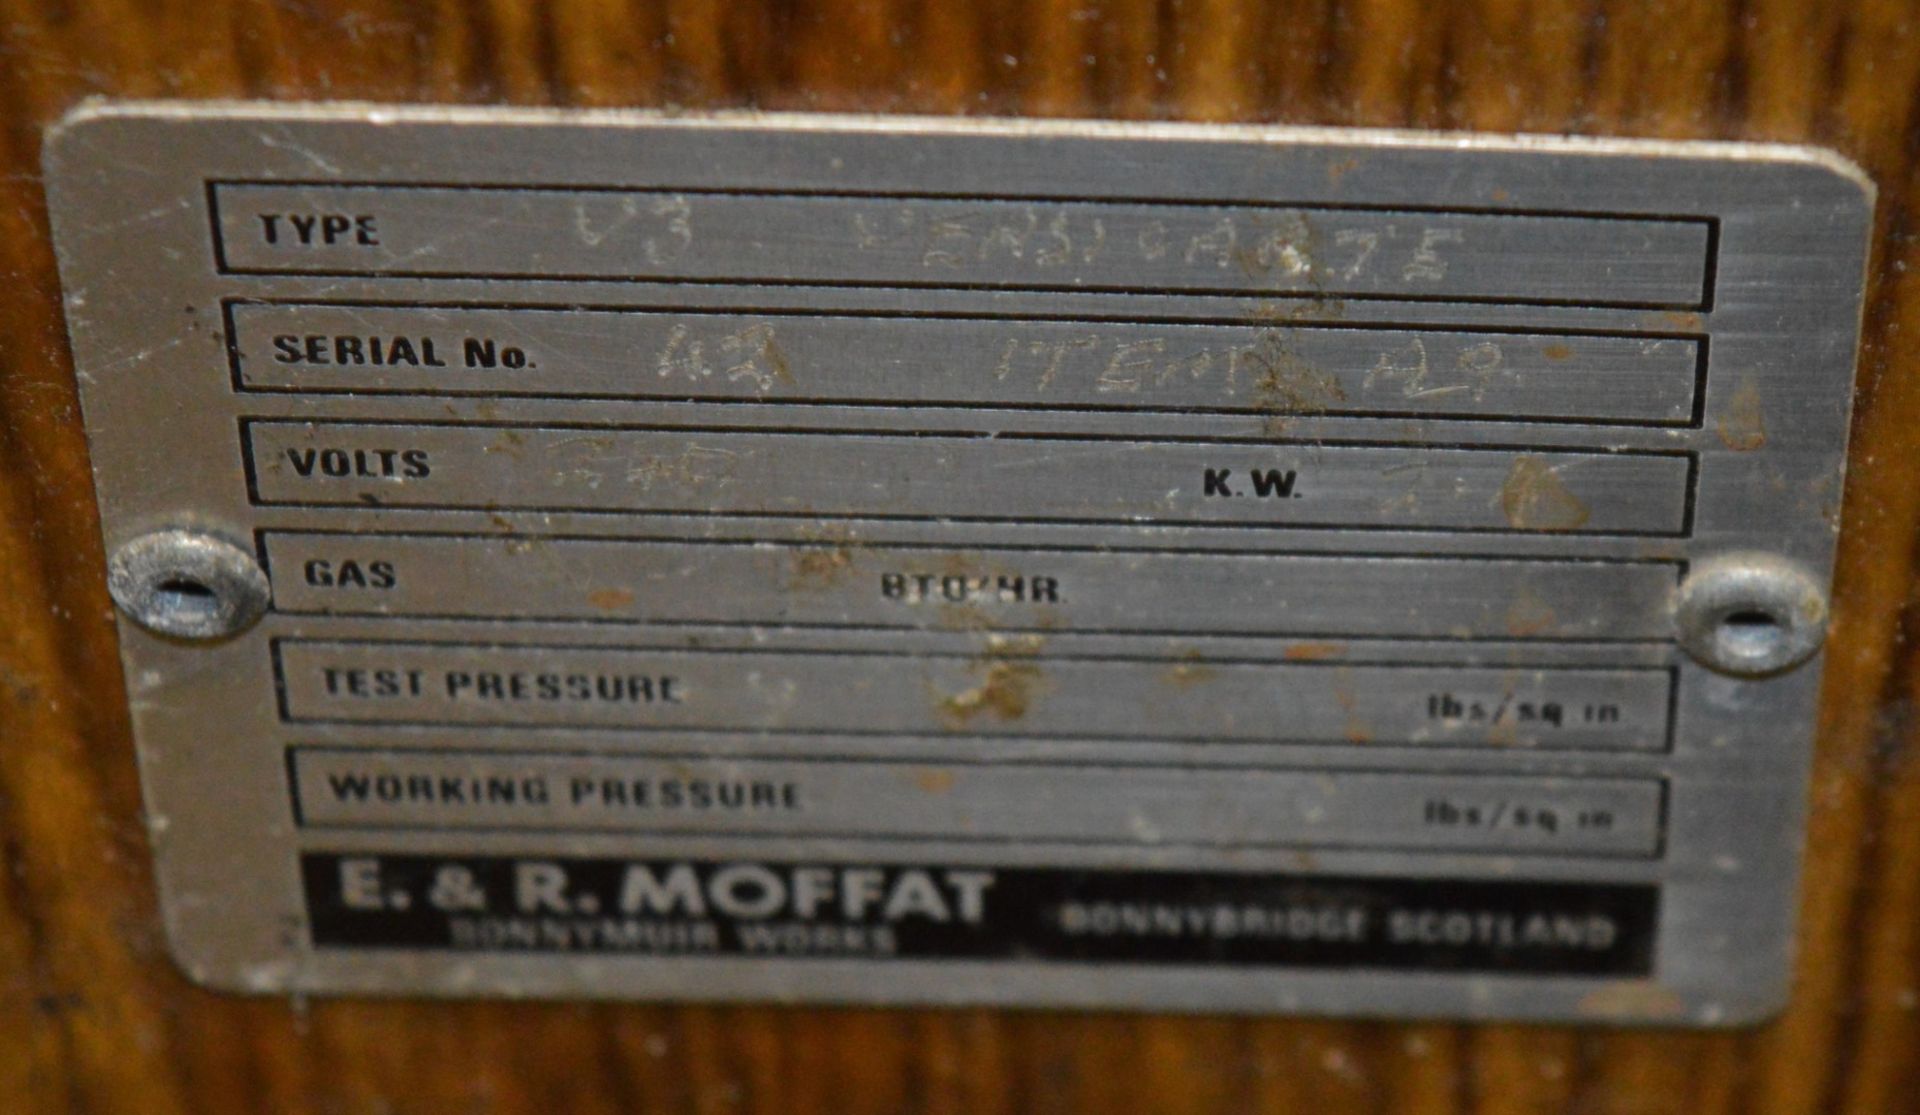 1 x Moffat V3 Versicarte Carery Counter on Castors - 240v - H89 x W119 x D61 cms - CL290 - Ref J1230 - Image 6 of 11